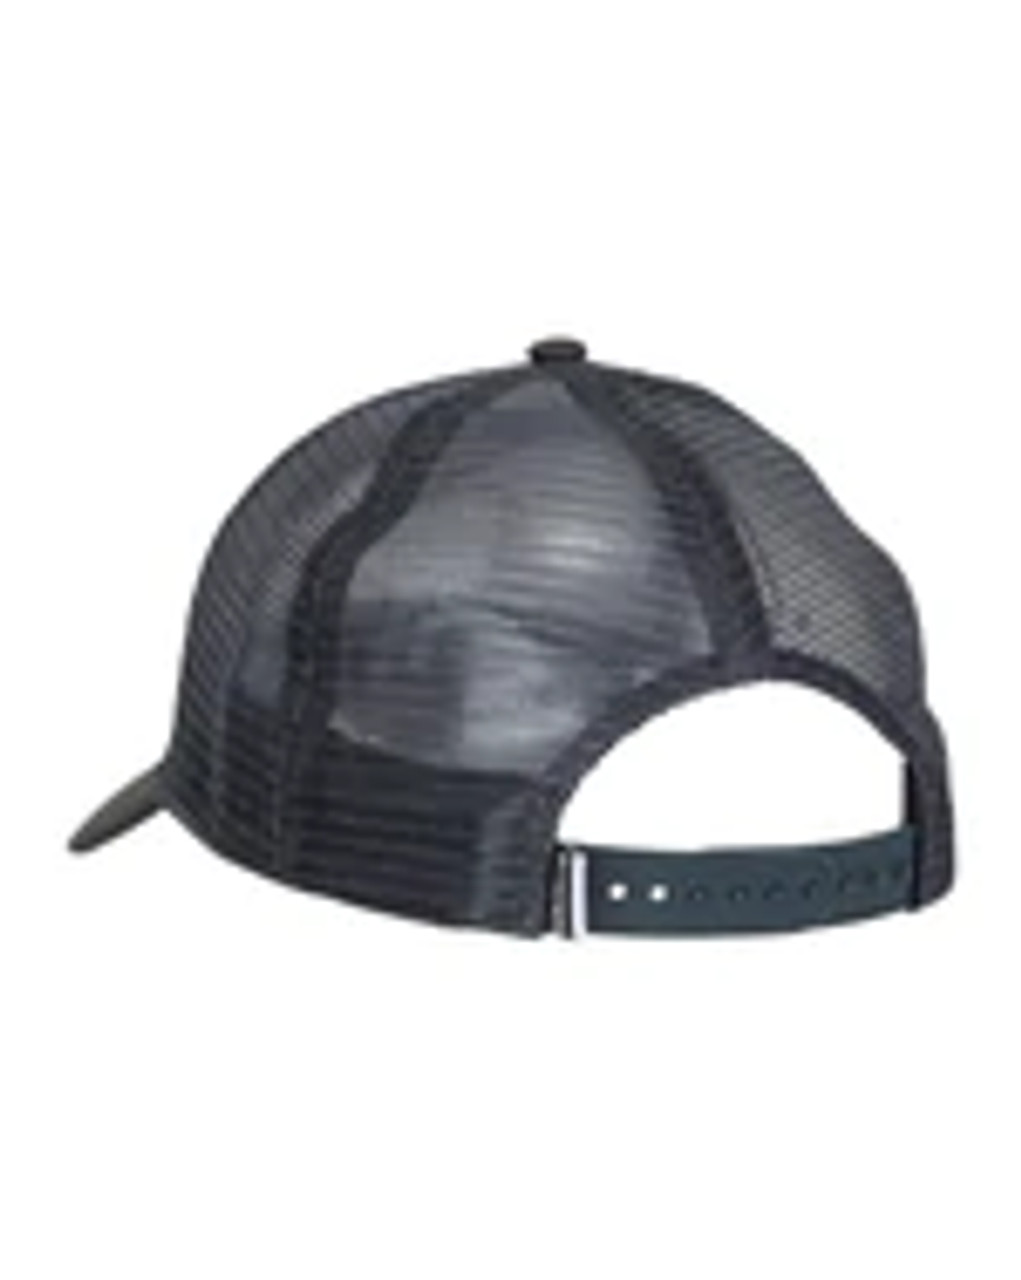 Shimano Vintage Snapback 1980s Fishing hat mesh back truckers cap